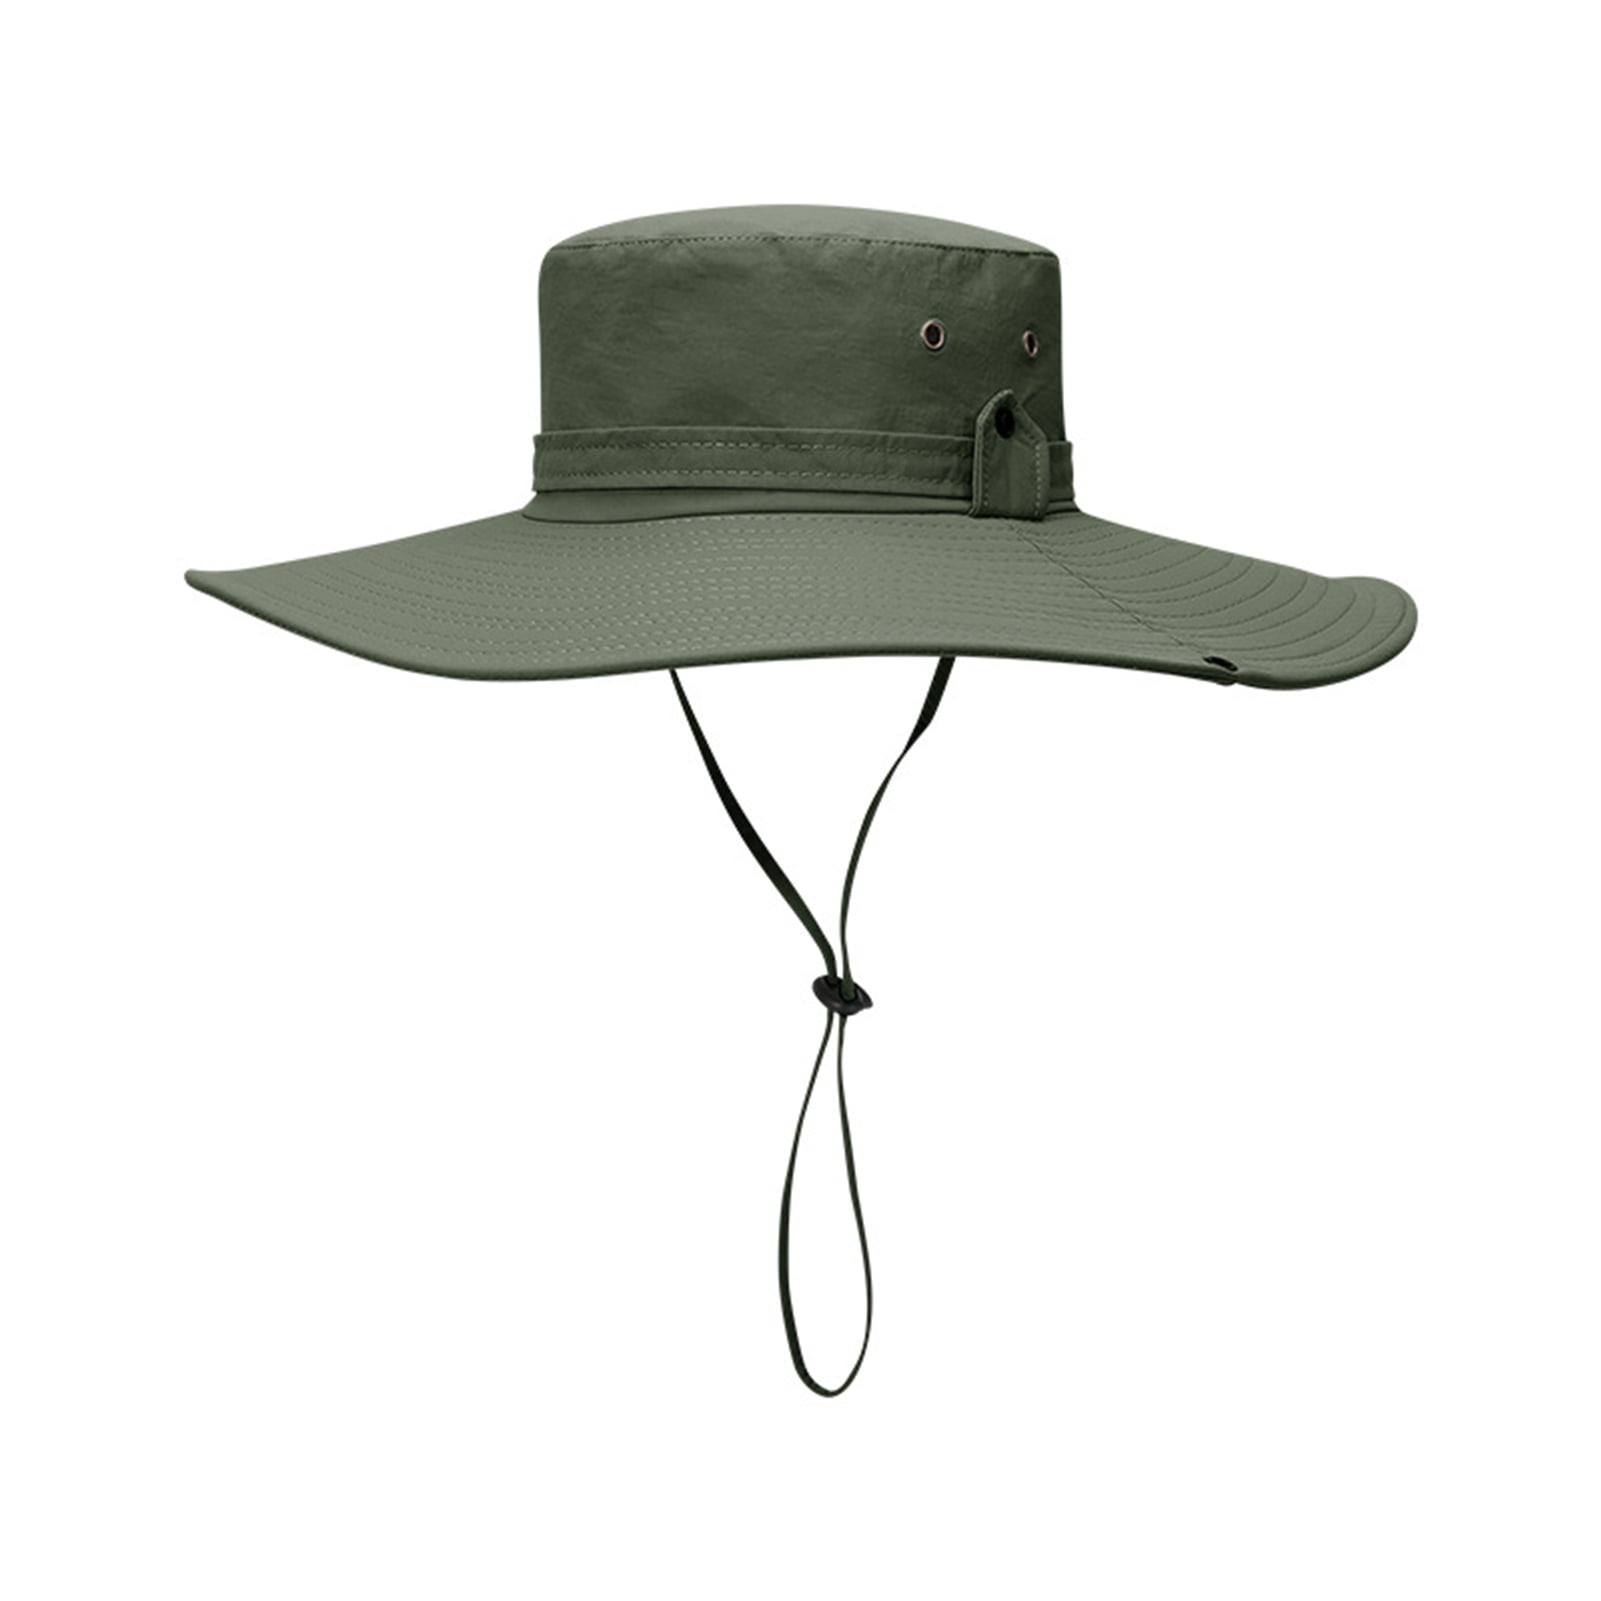 D-GROEE Sun Hats for Men Wide Brim Hat Beach Fishing Outdoor